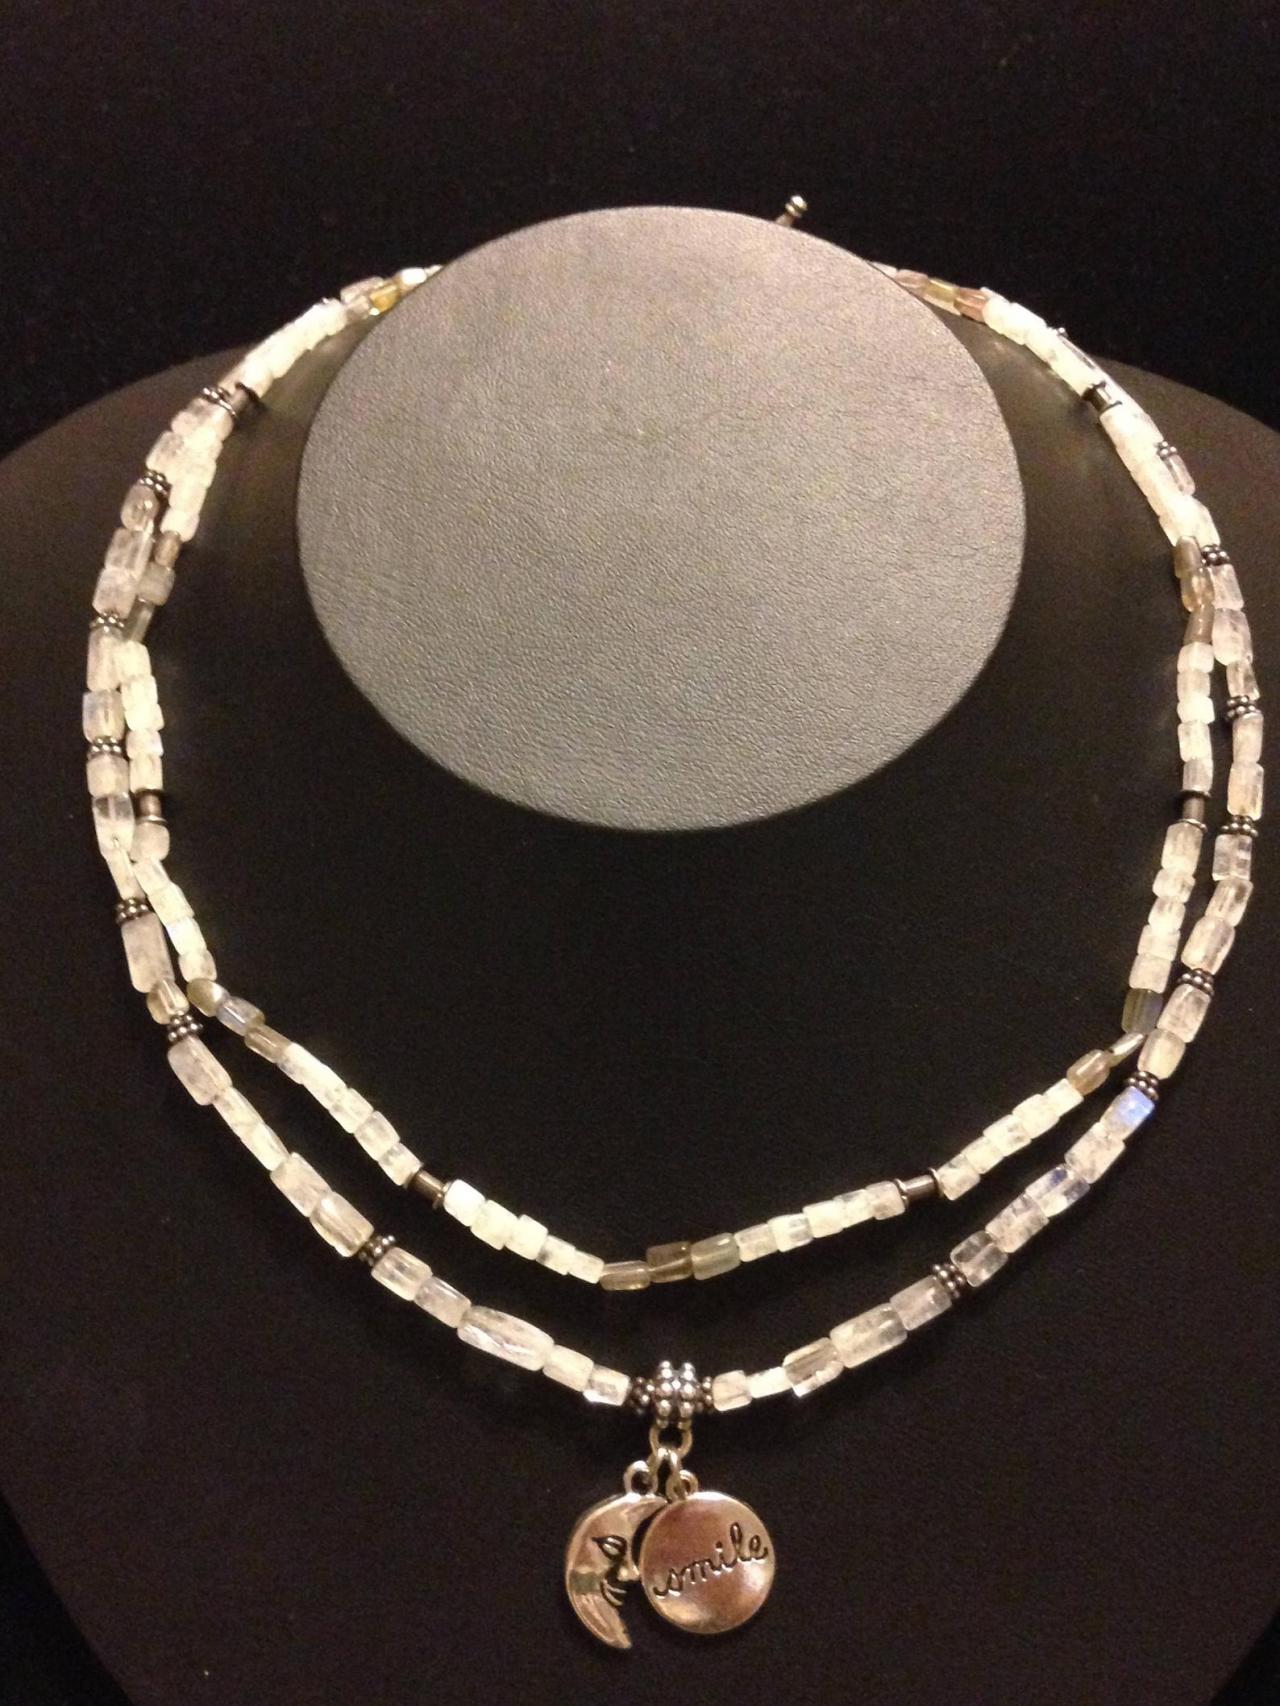 2 Rainbow Moonstone And Labradorite Beaded Necklace And Bracelet Set/beaded Necklace/beaded Bracelet/moonstone Jewelry/moonstone Necklace